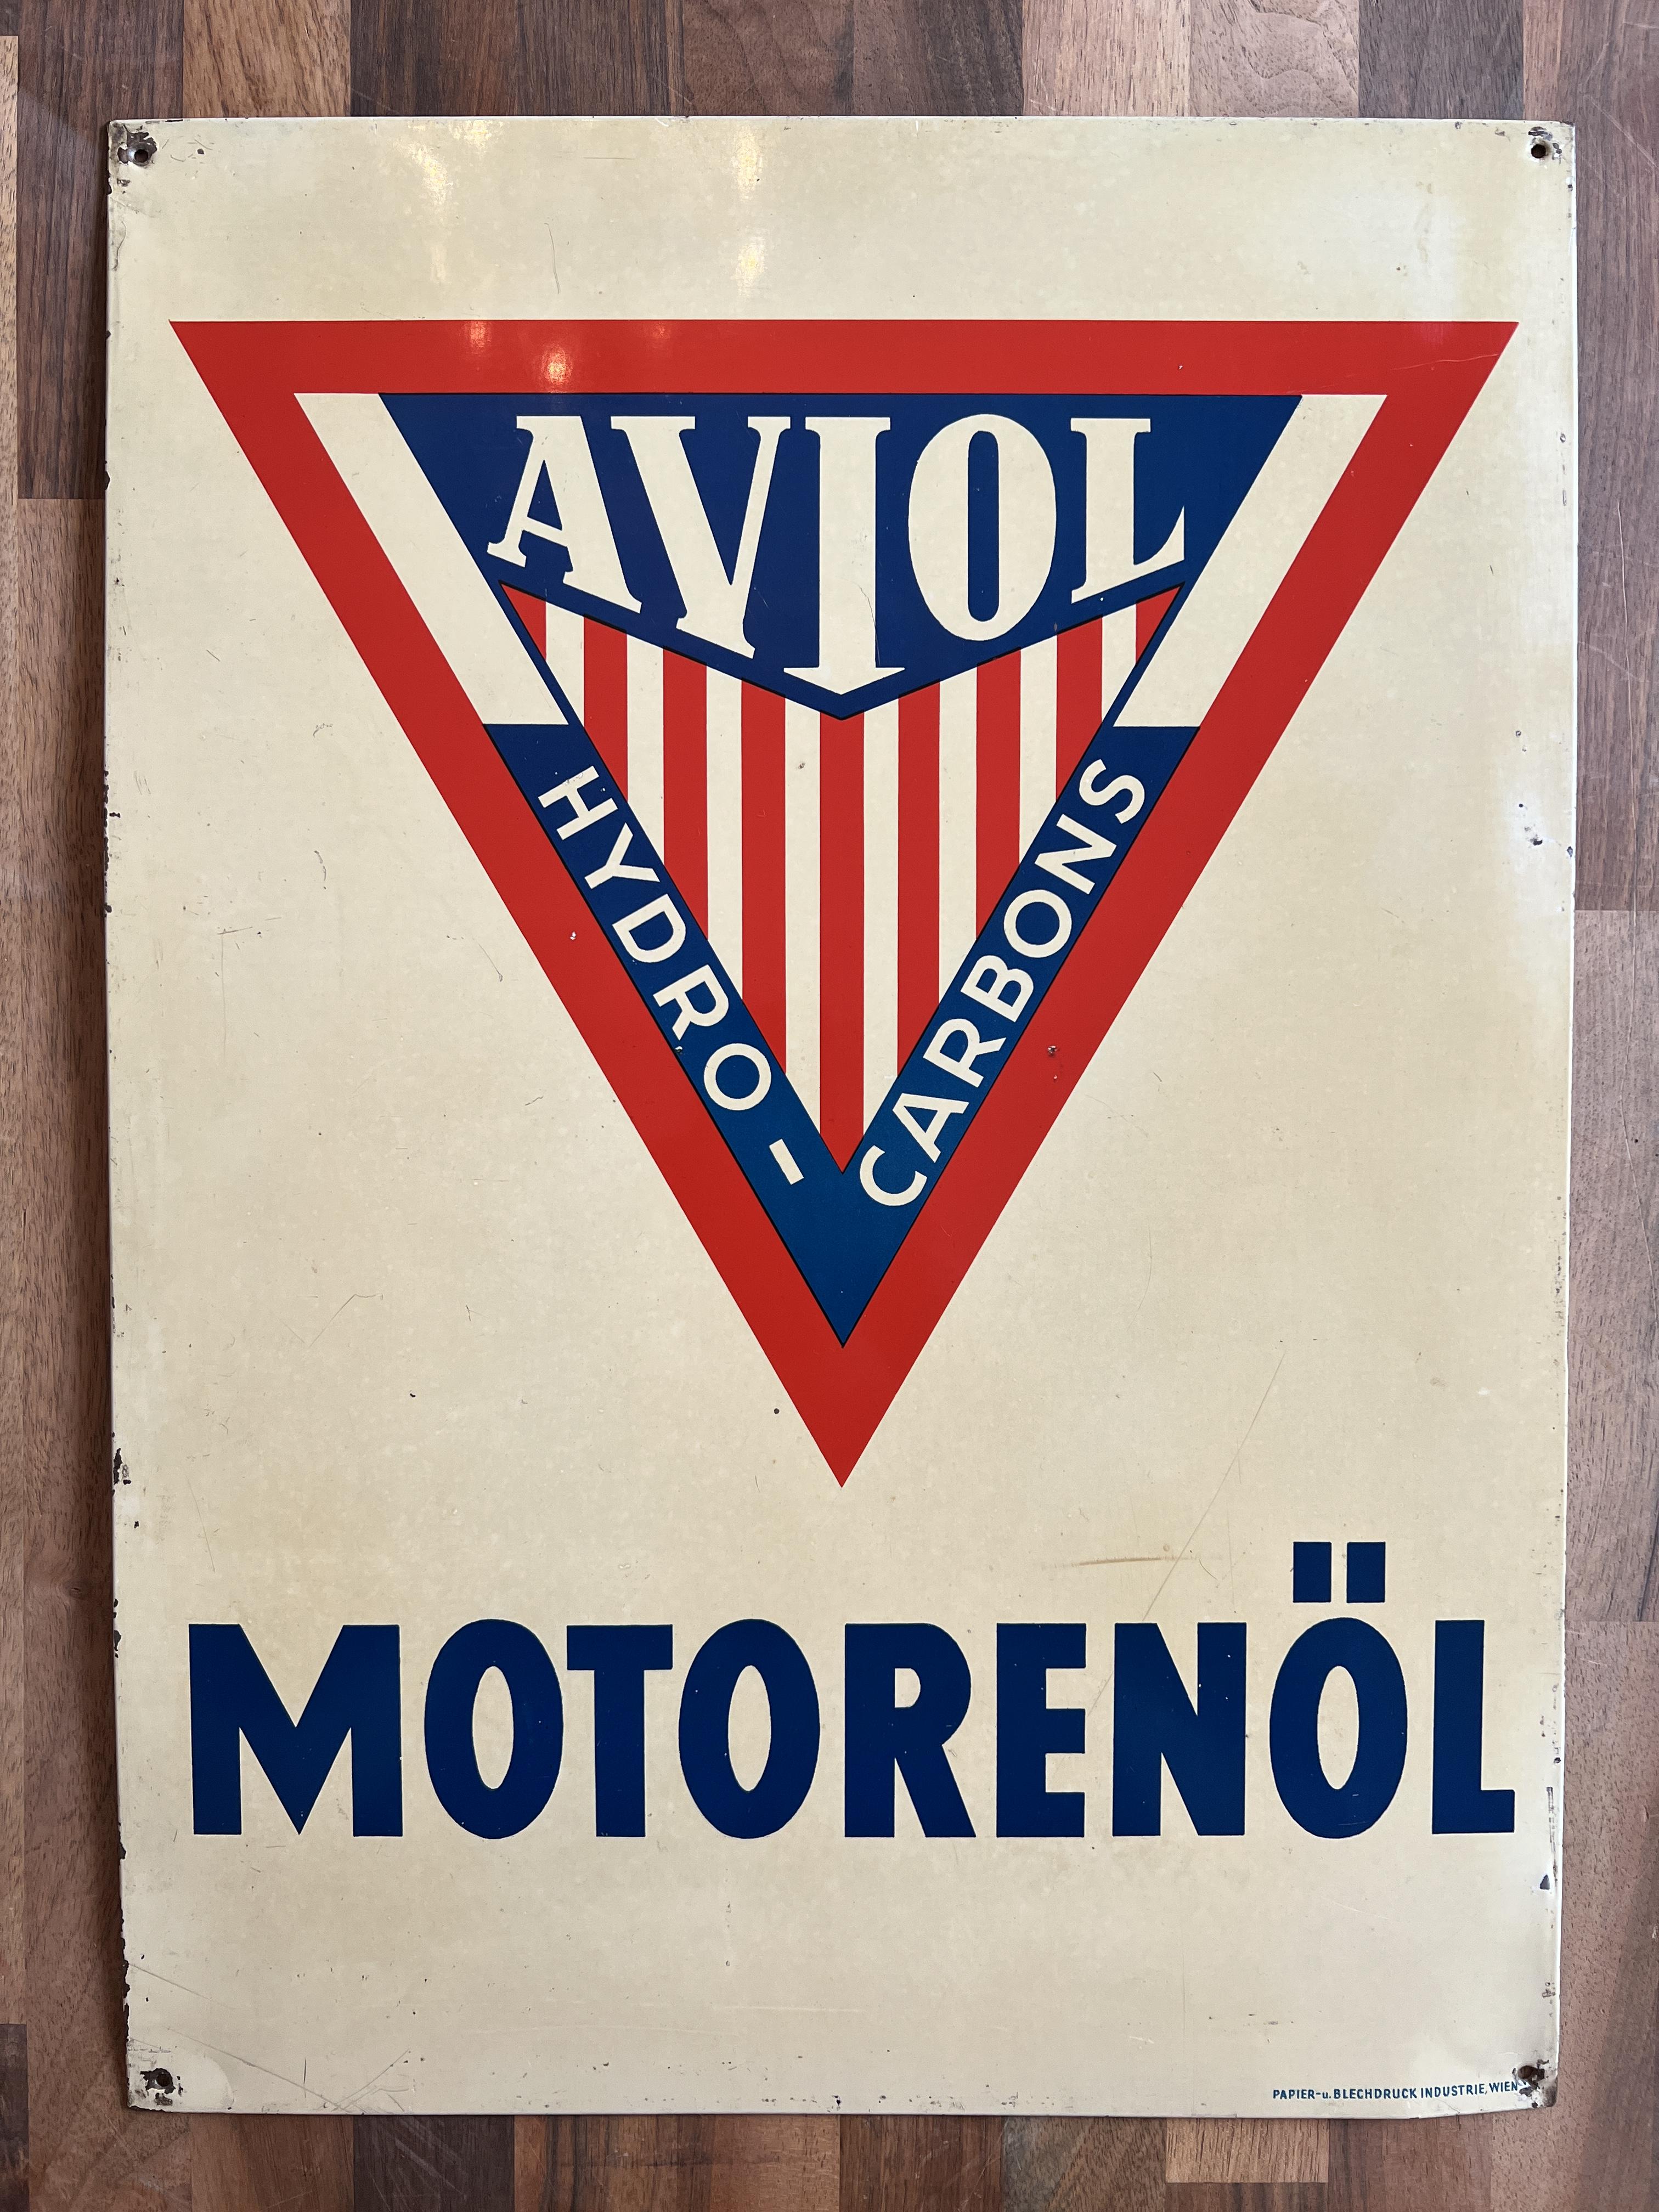 Antikes Blechschild Aviol Motorenöl um ca. 1920